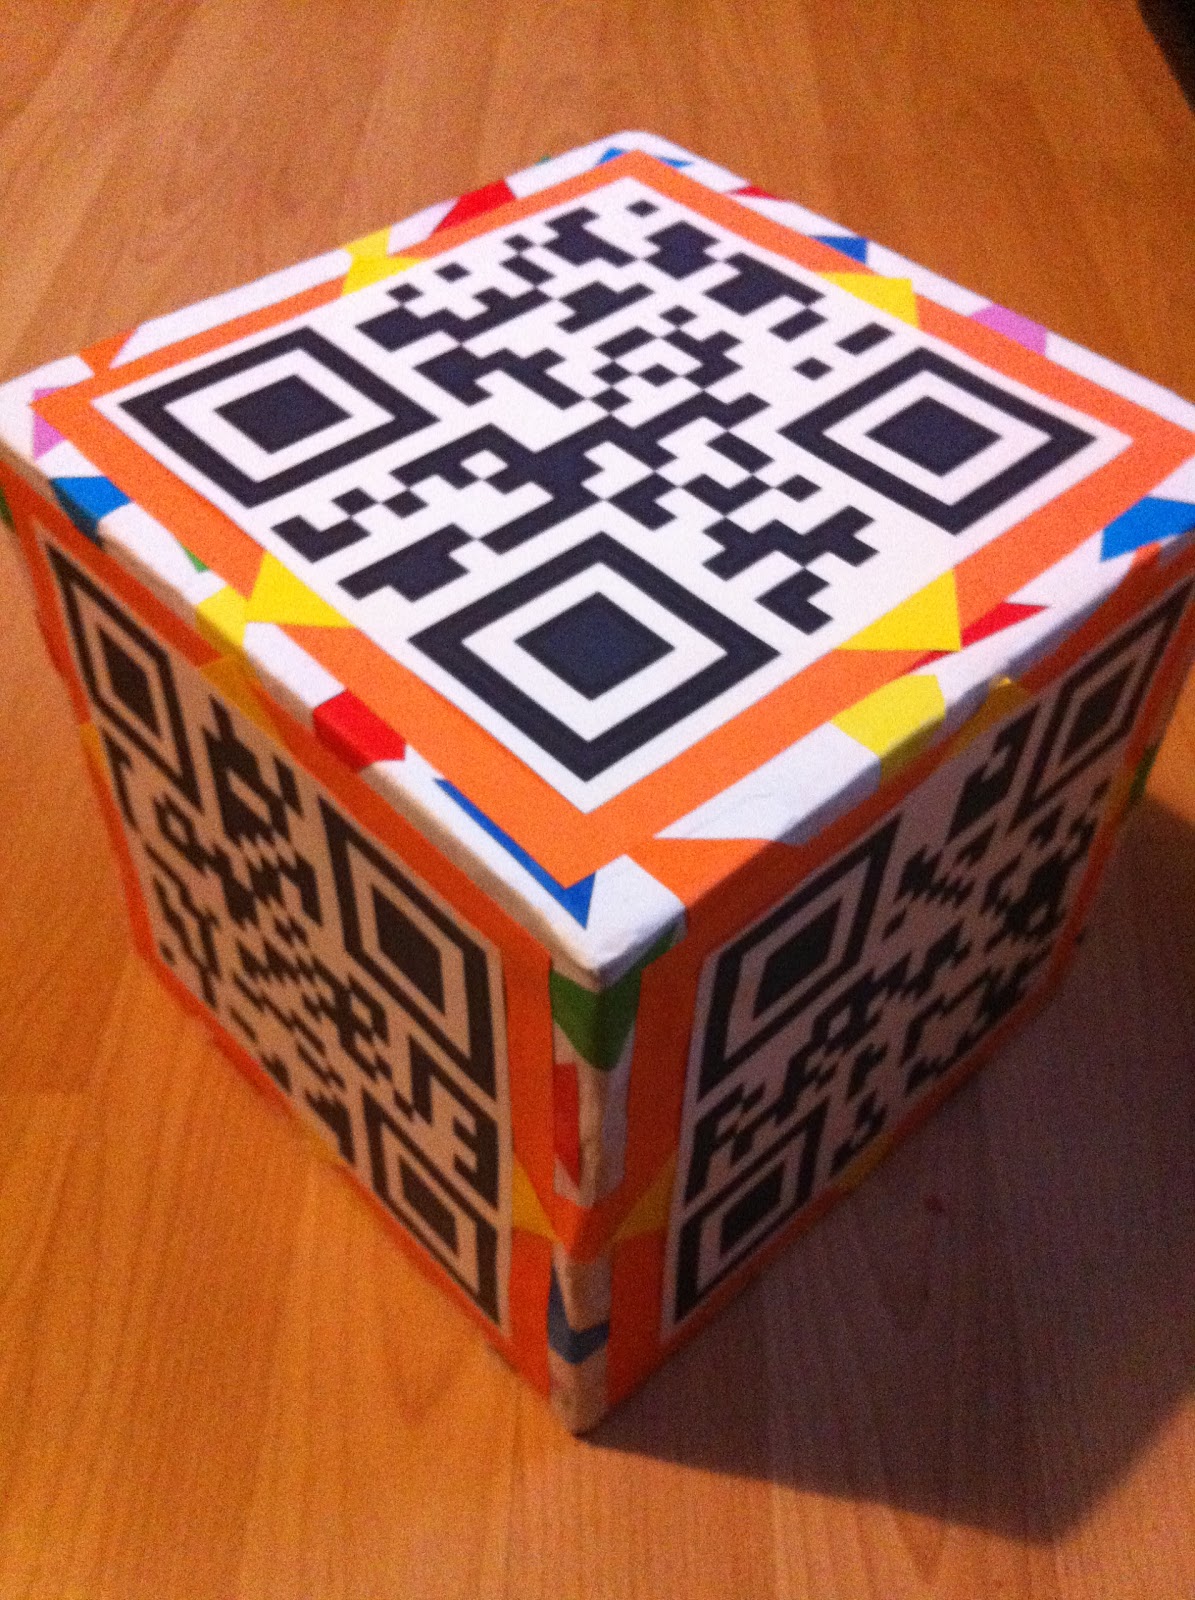 Qr код куб. QR куб. QR куб ПВХ. QR-куб мягкий сувенирка. Куб код.